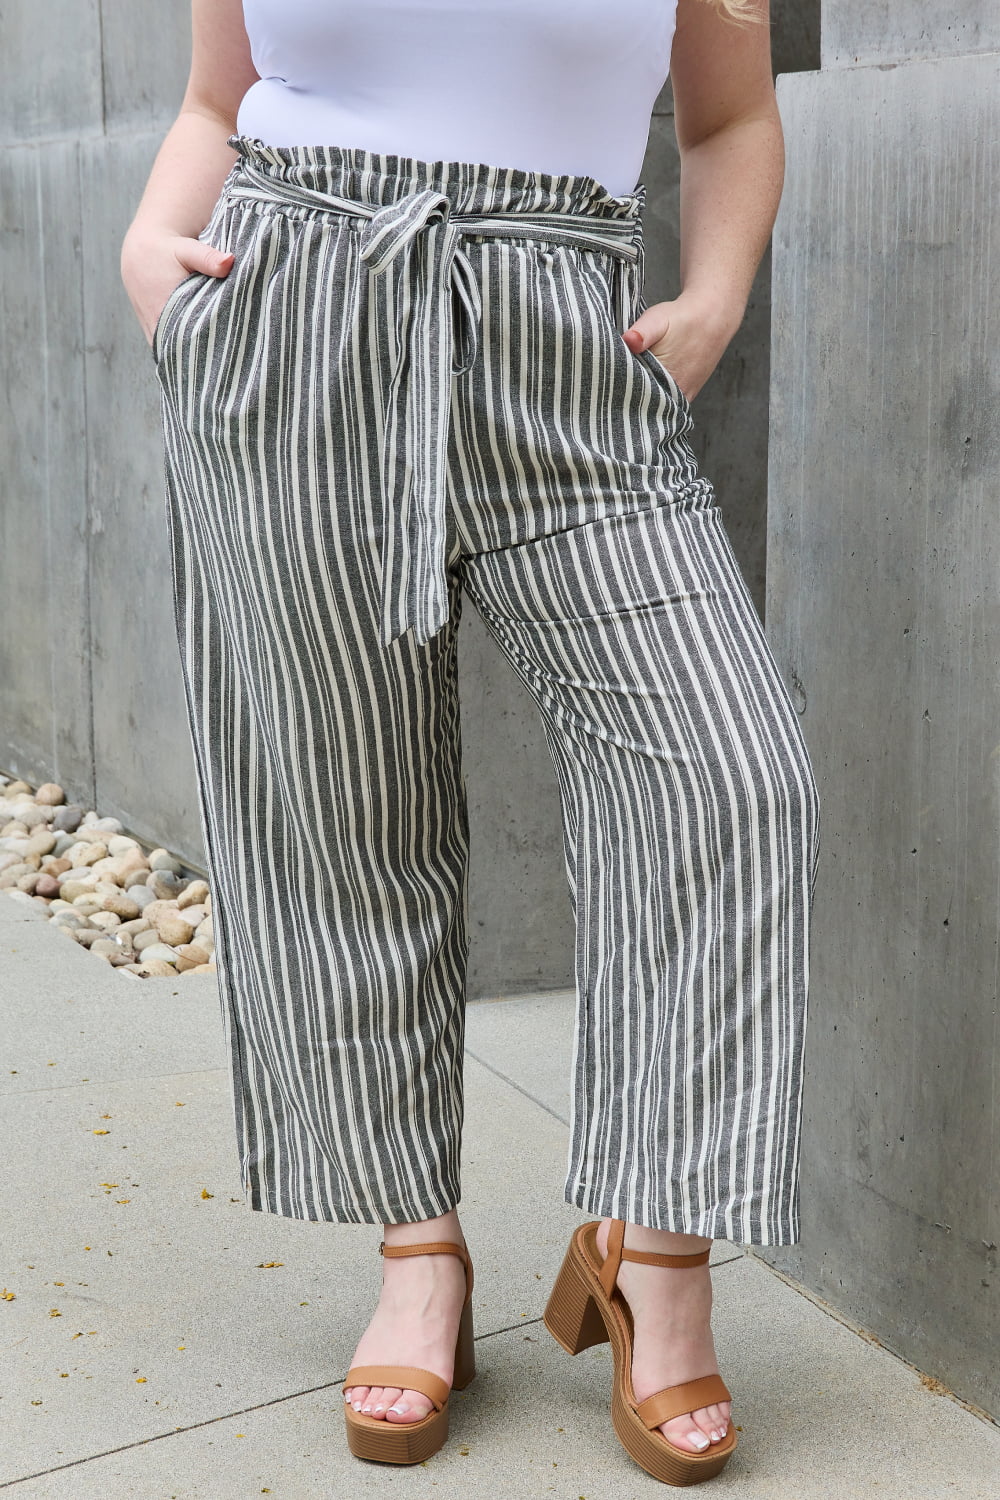 Find Your Path Striped Linen Pants (L-3X)